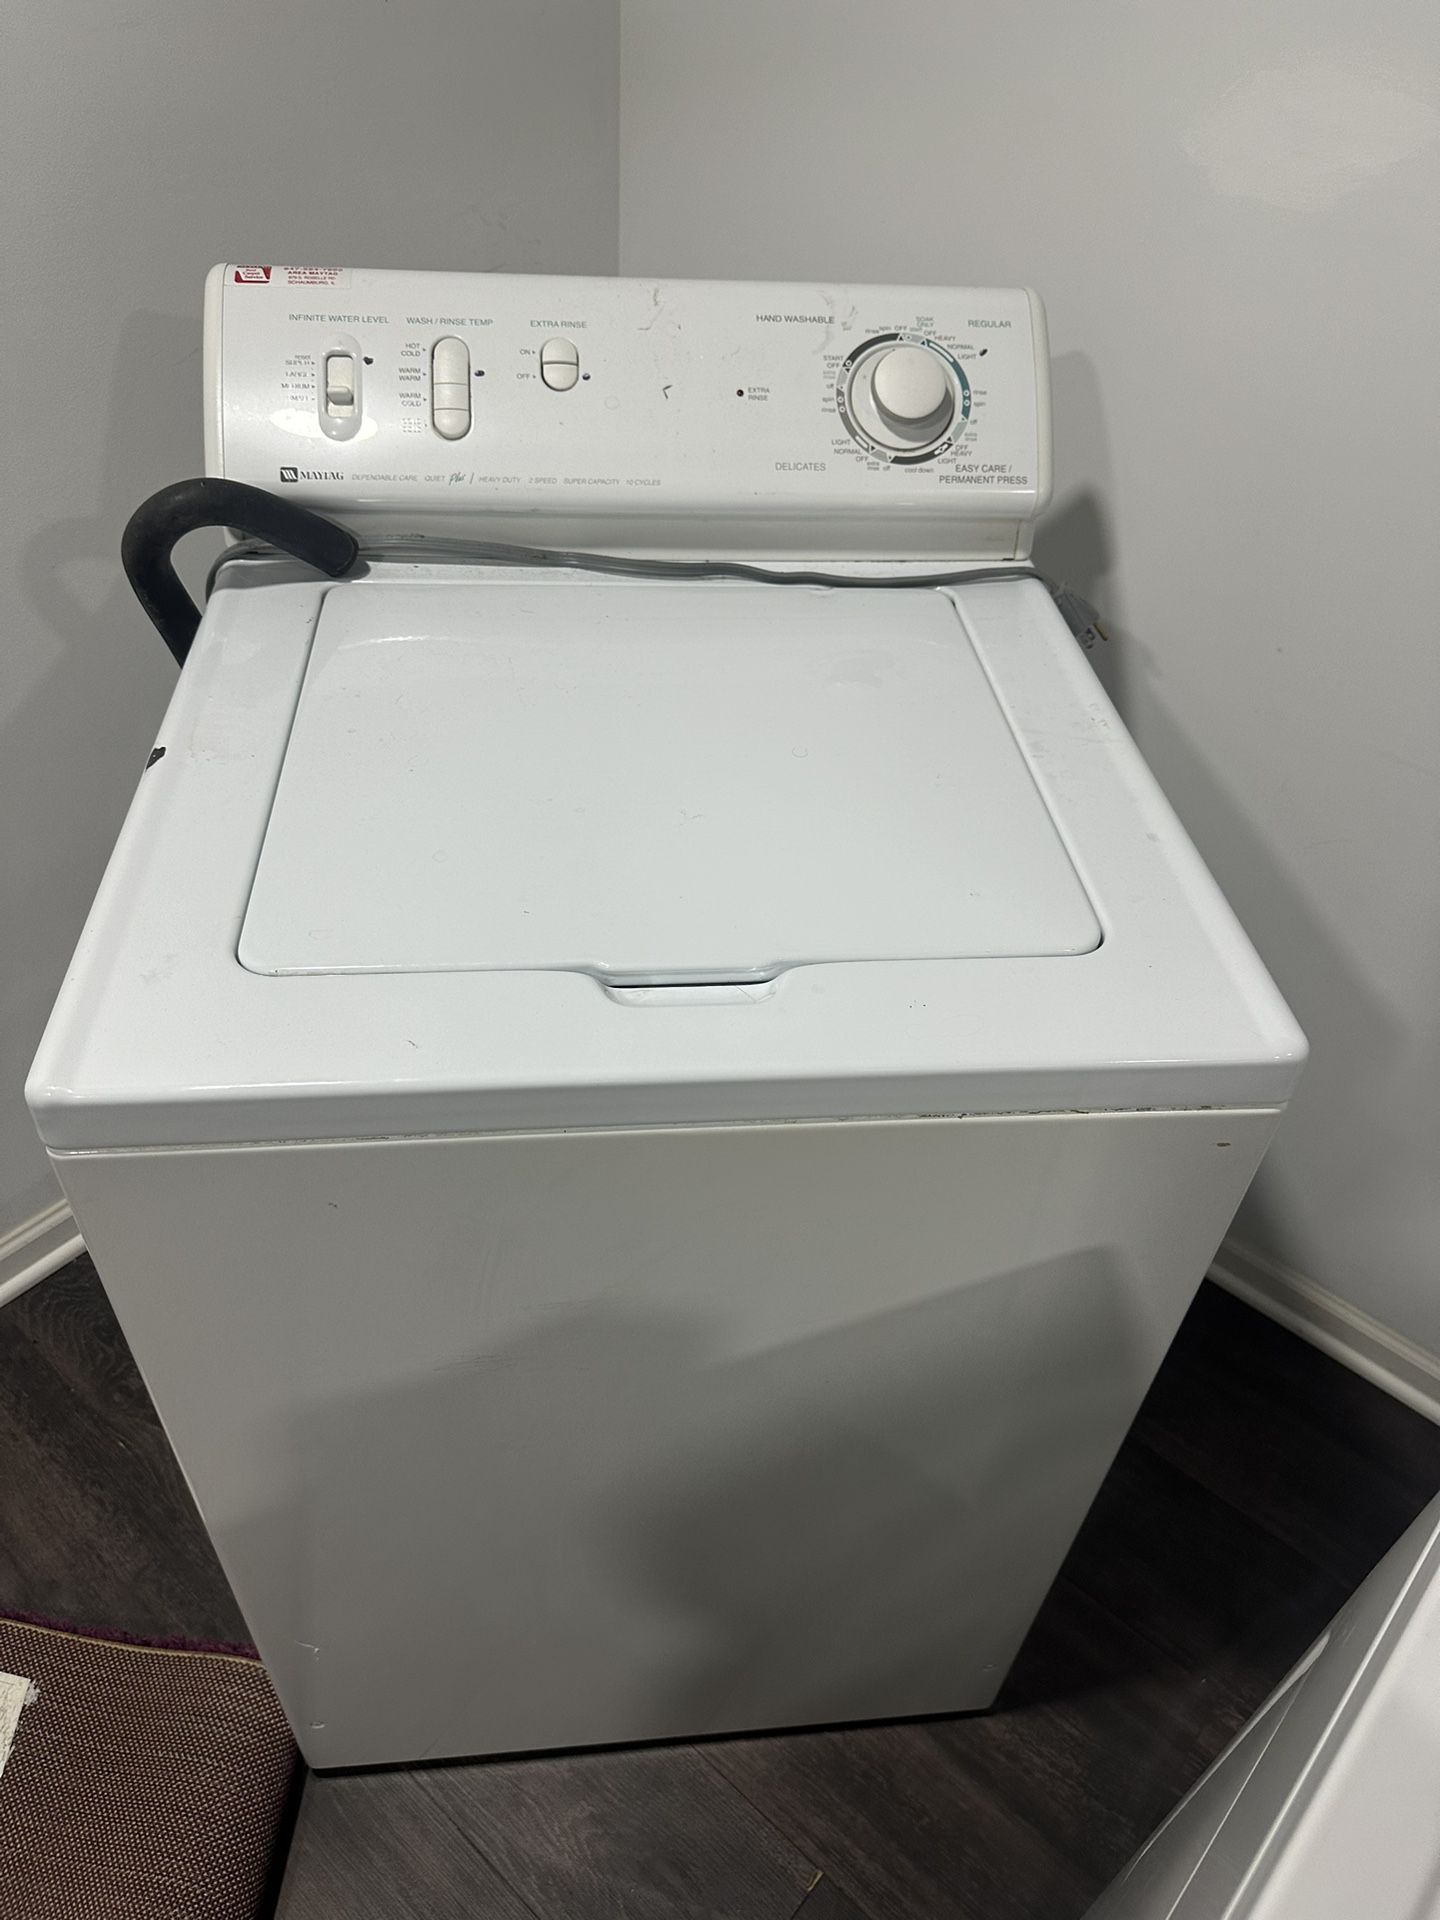 Maytag Washer & Whirlpool dryer - $120 Obo